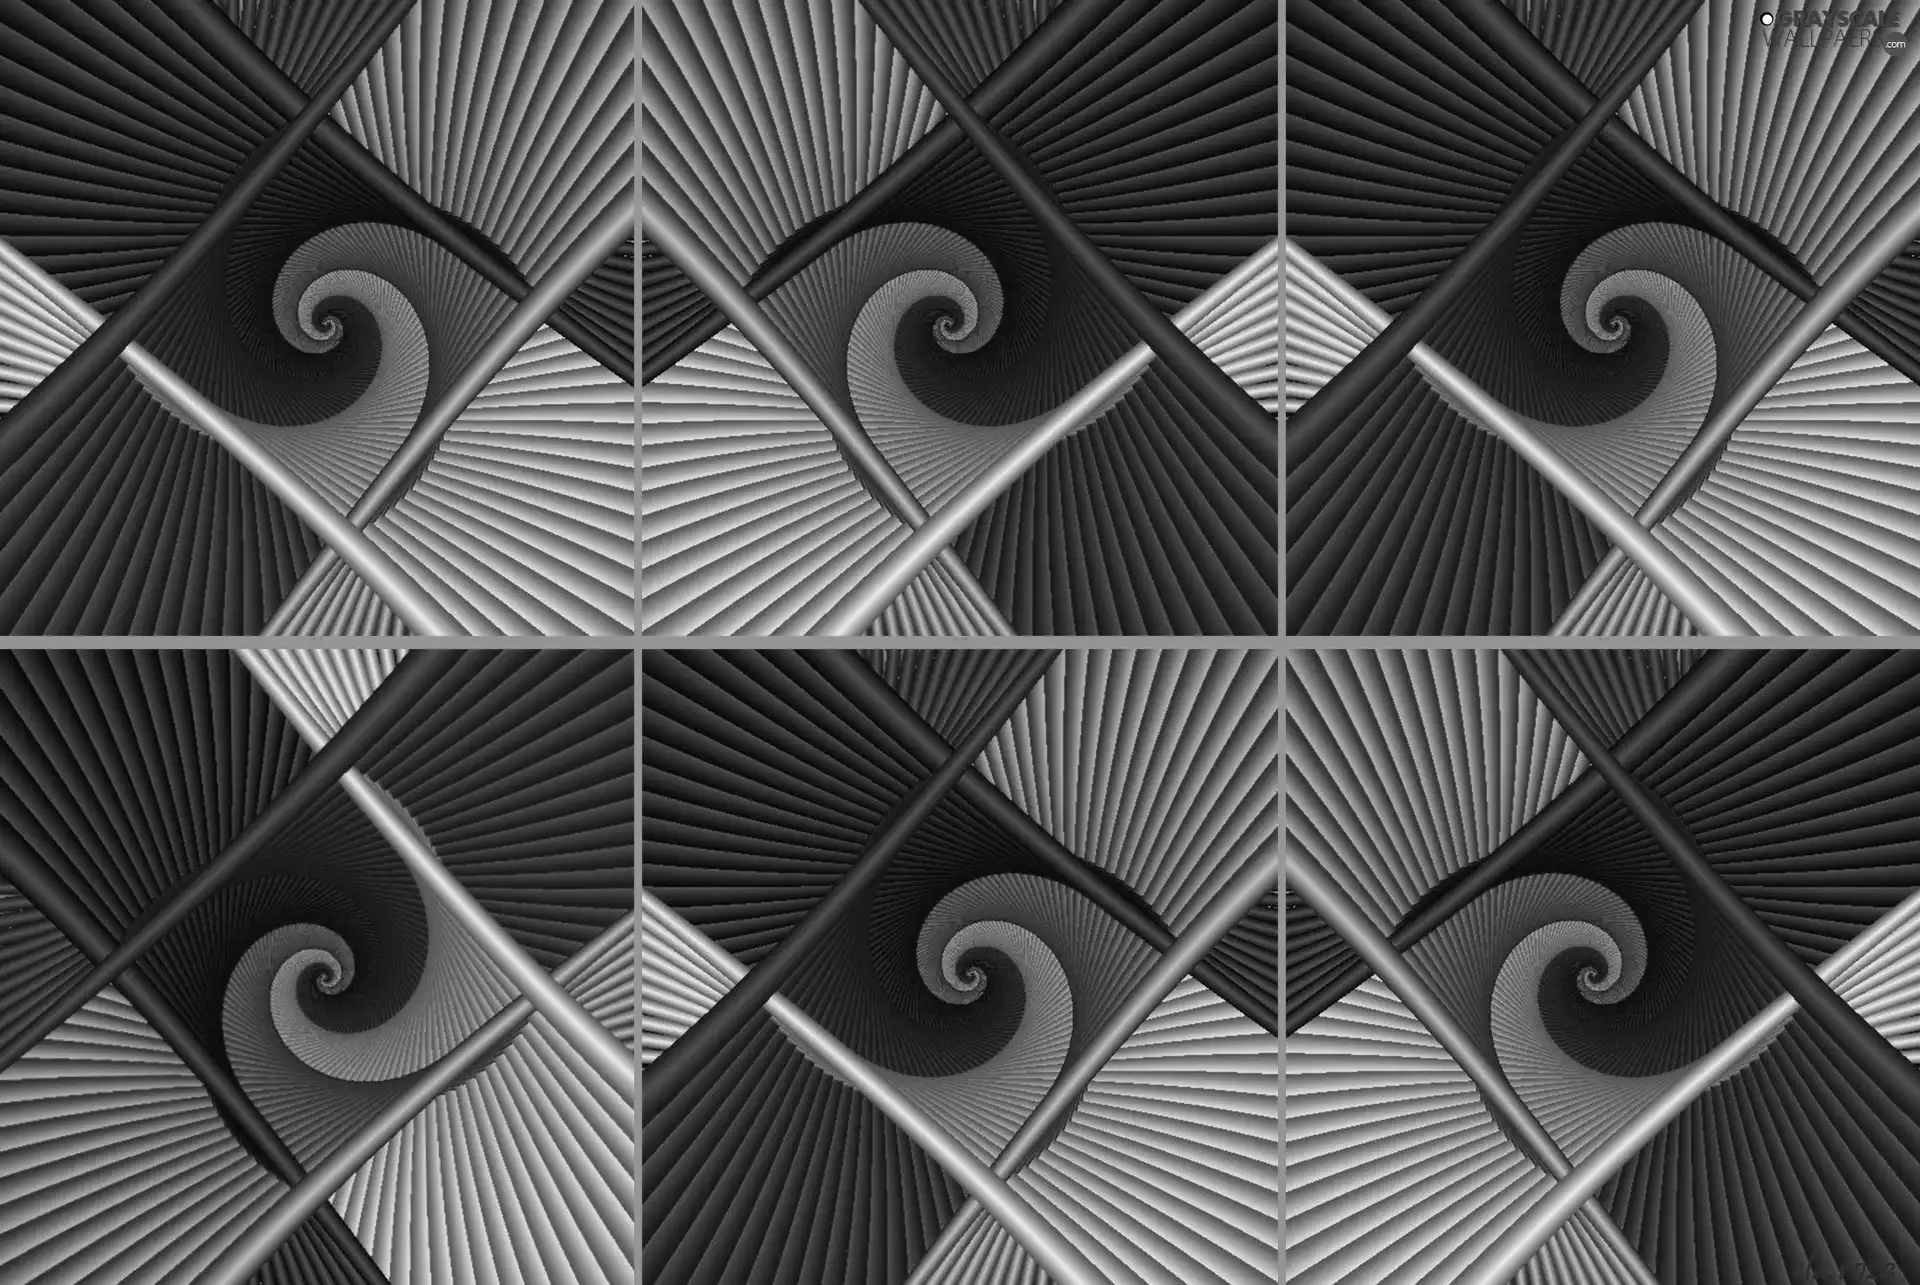 Fraktal, Abstract, patterns